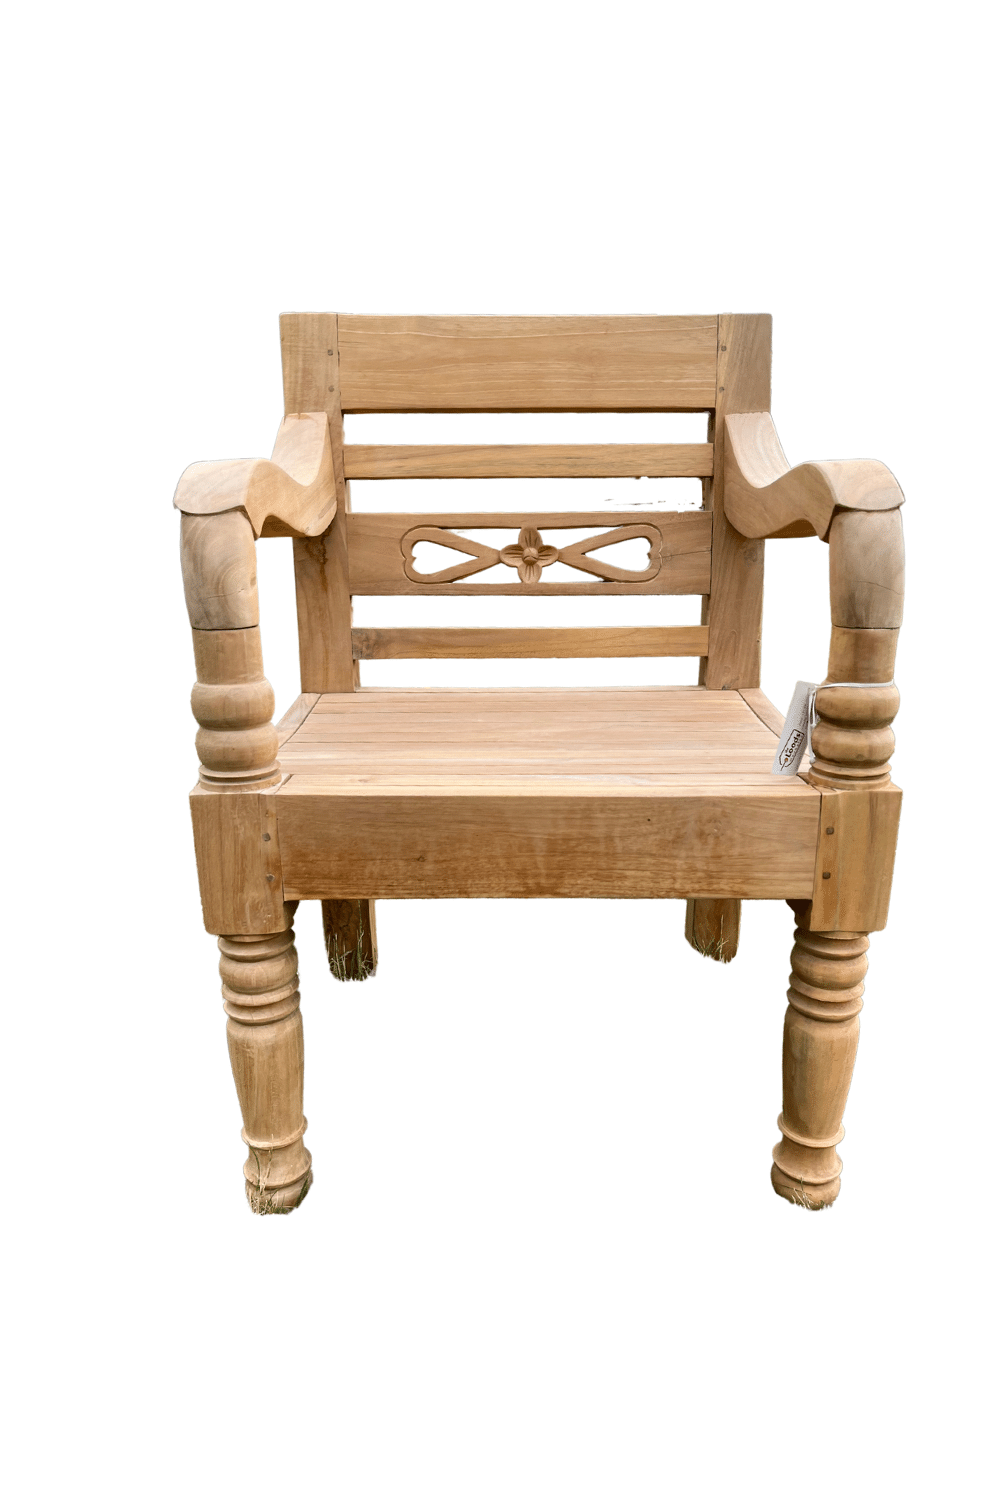 teak houten tuin stoel stationsstoel